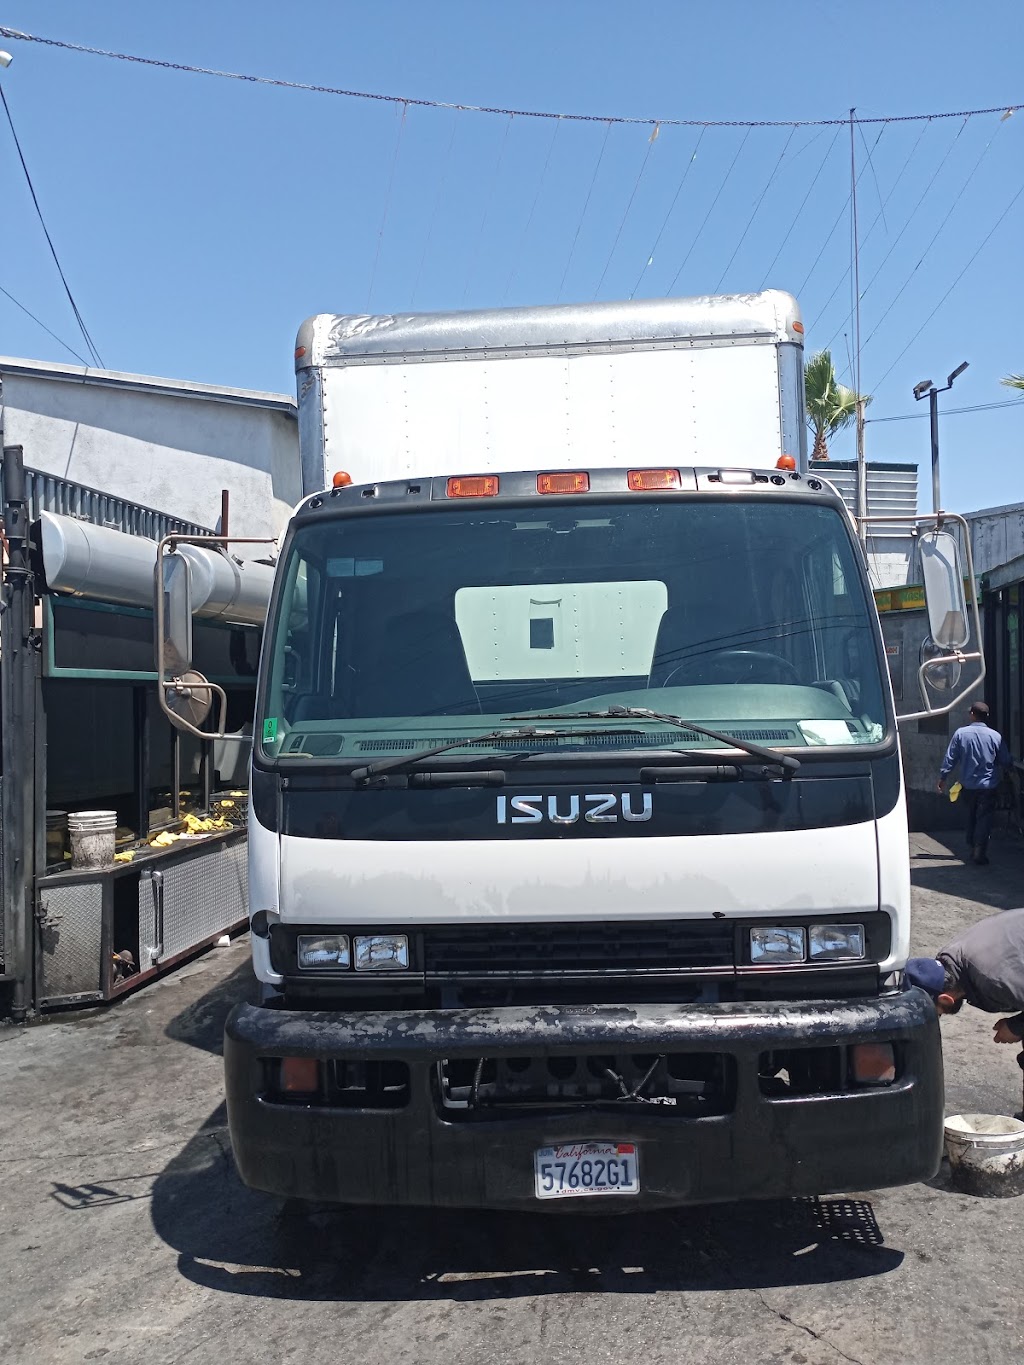 B J Truck Wash | 12715 S Main St, Los Angeles, CA 90061 | Phone: (323) 755-2804